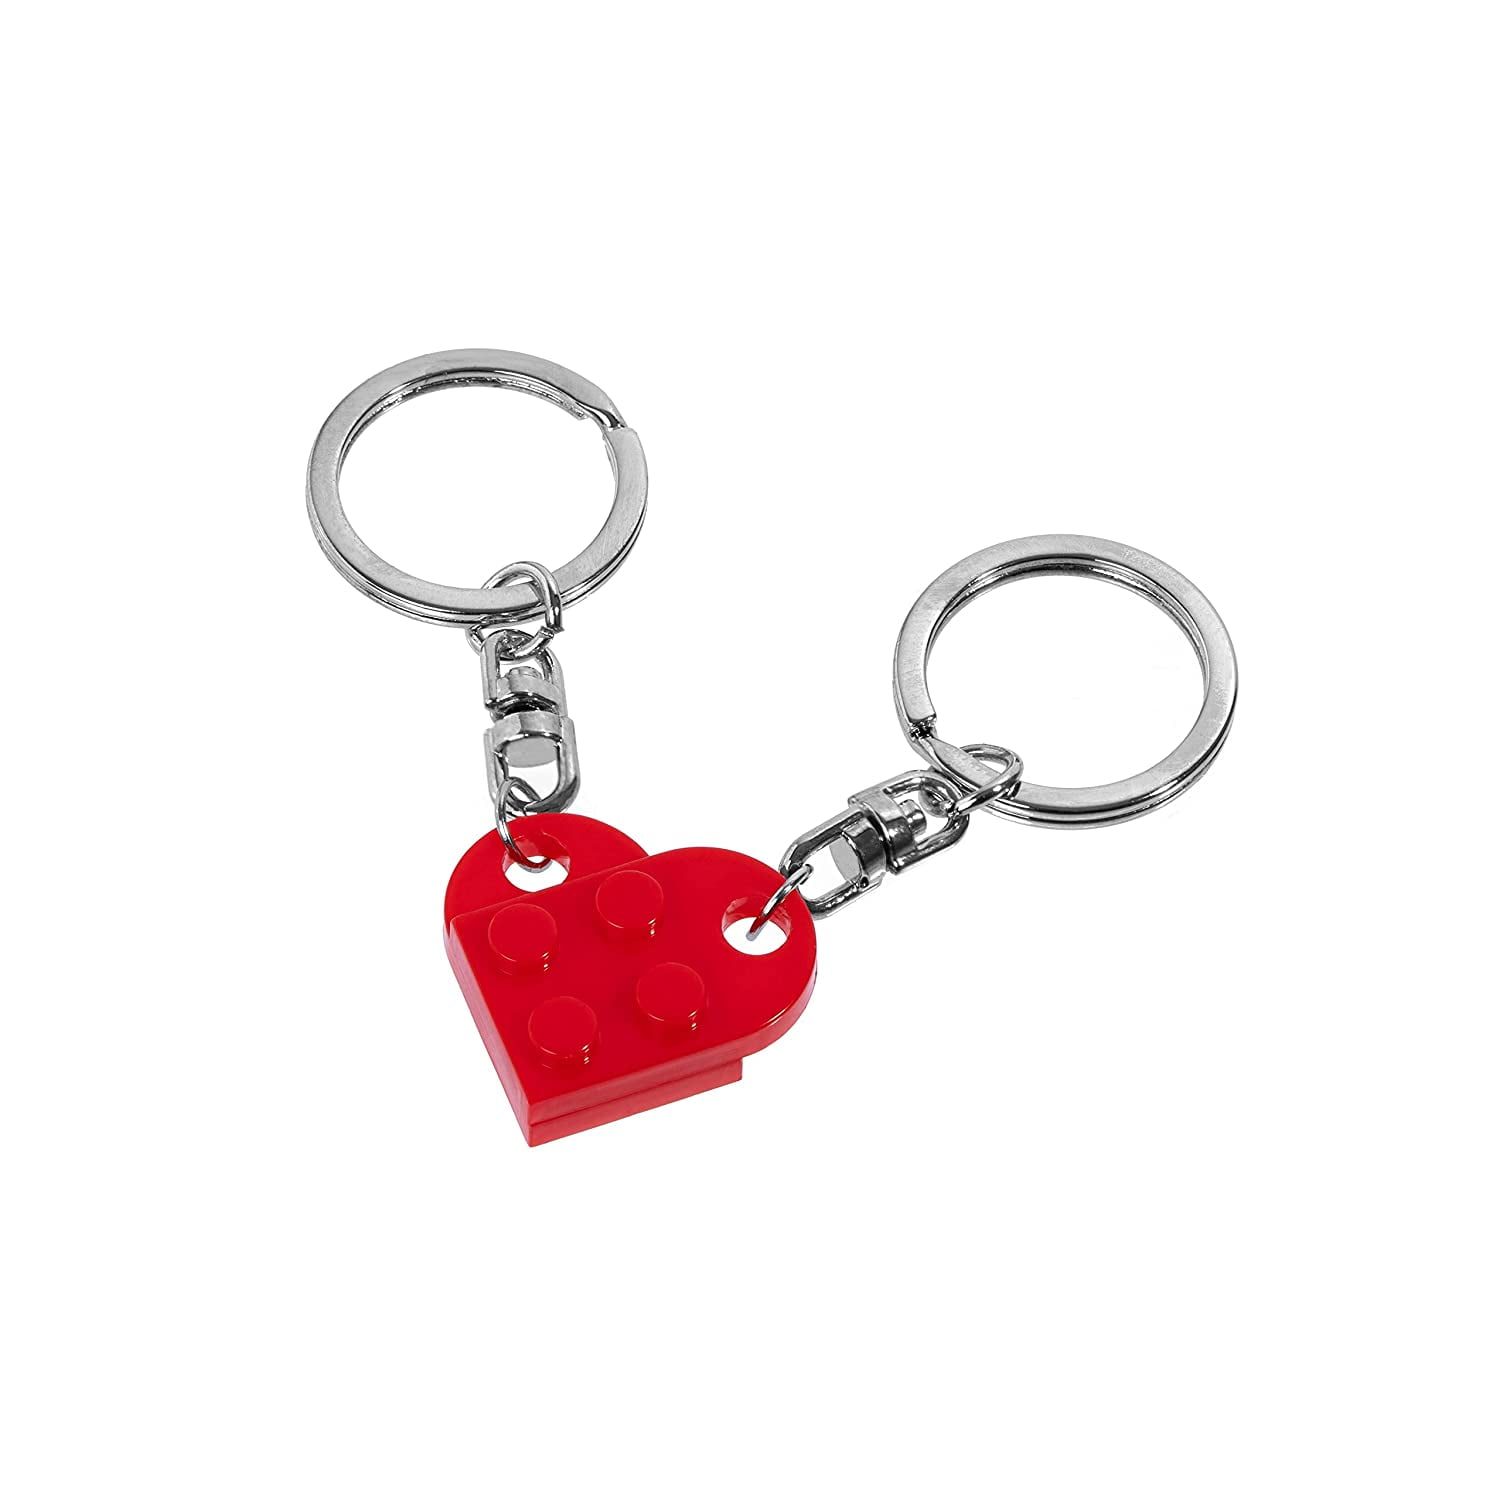 Matching Keychains Couples Brick Heart For Lego Boyfriend Girlfriend Cute Best Friends Necklace Split 2 Piece Two Set Gift 6d00c0a0 1f1c 49f7 ae4d 3ab7f33dec68.087e7919b6ad52233ad676e553535c97